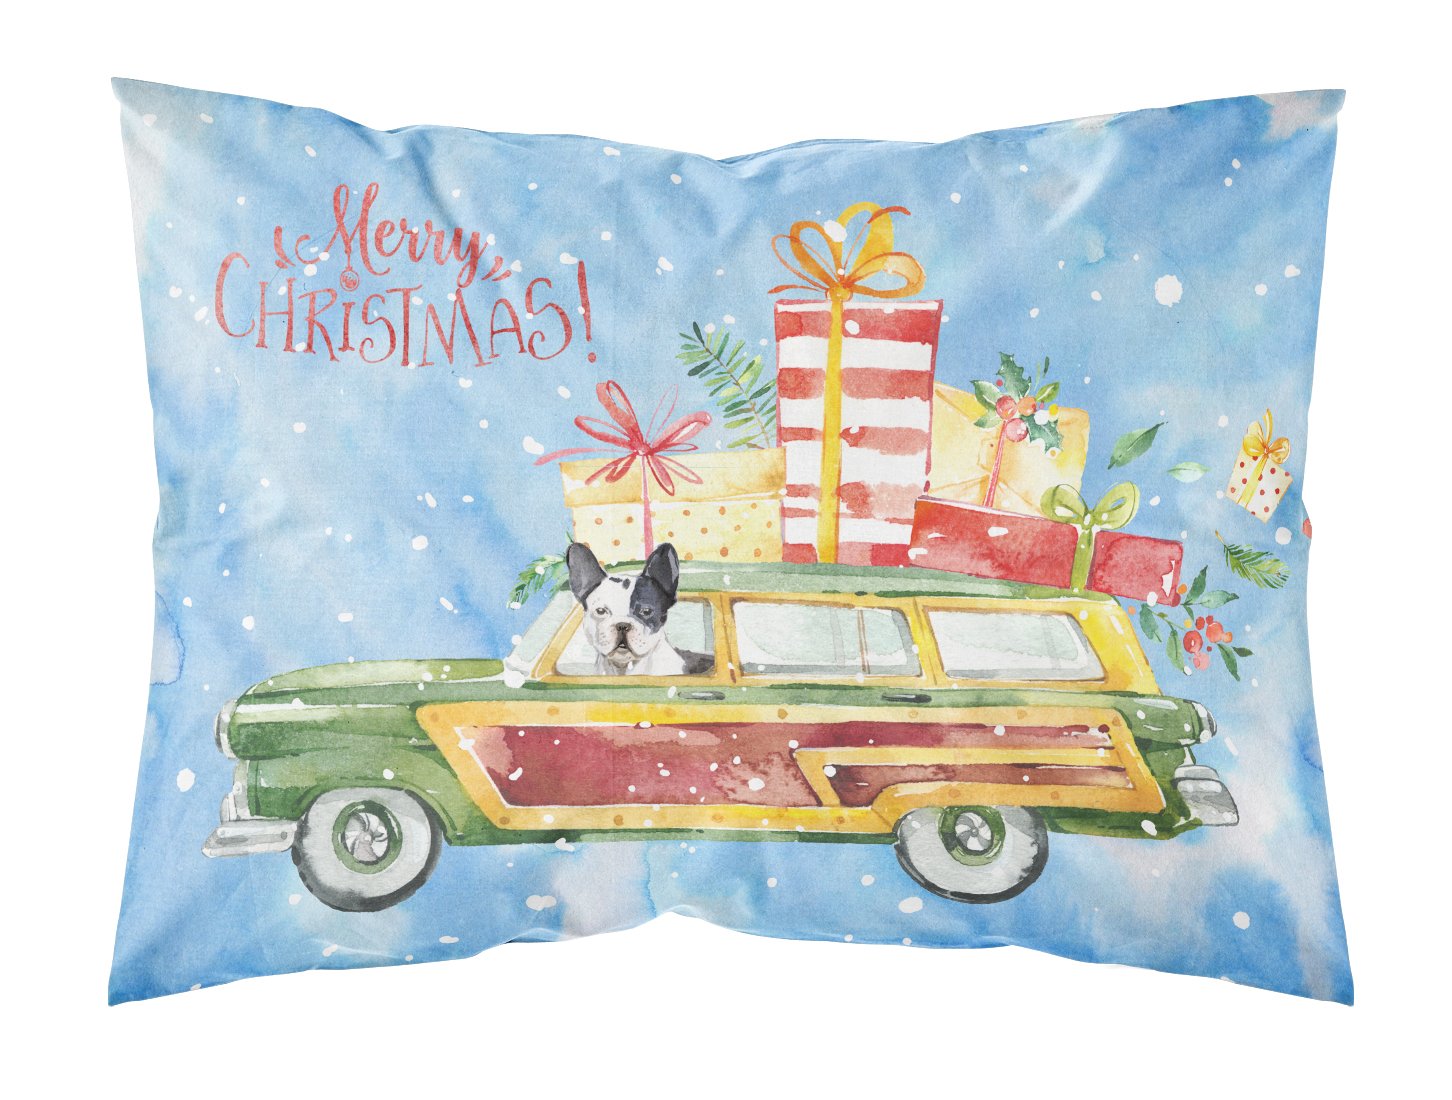 Merry Christmas French Bulldog Fabric Standard Pillowcase CK2444PILLOWCASE by Caroline's Treasures